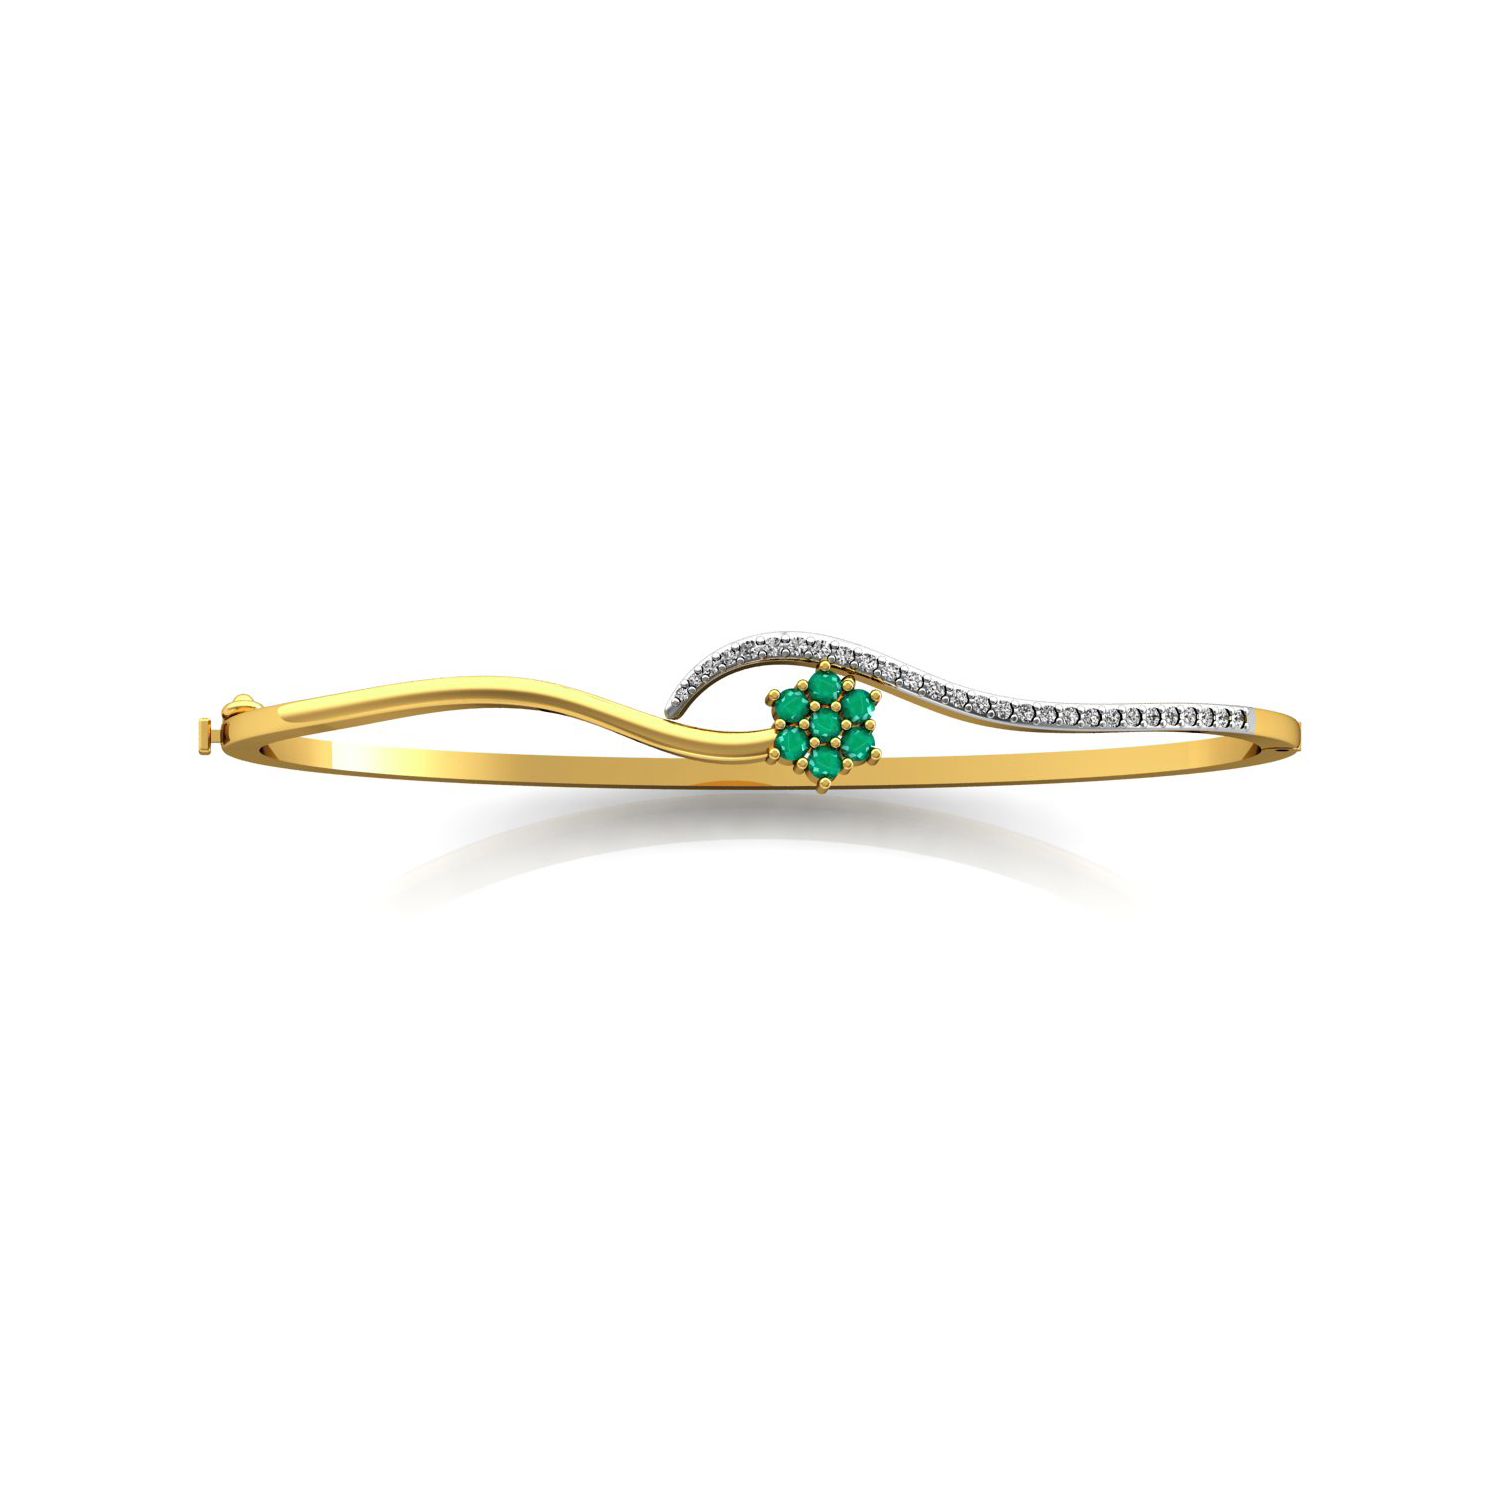 Real diamond emerald solid gold bangle bracelet